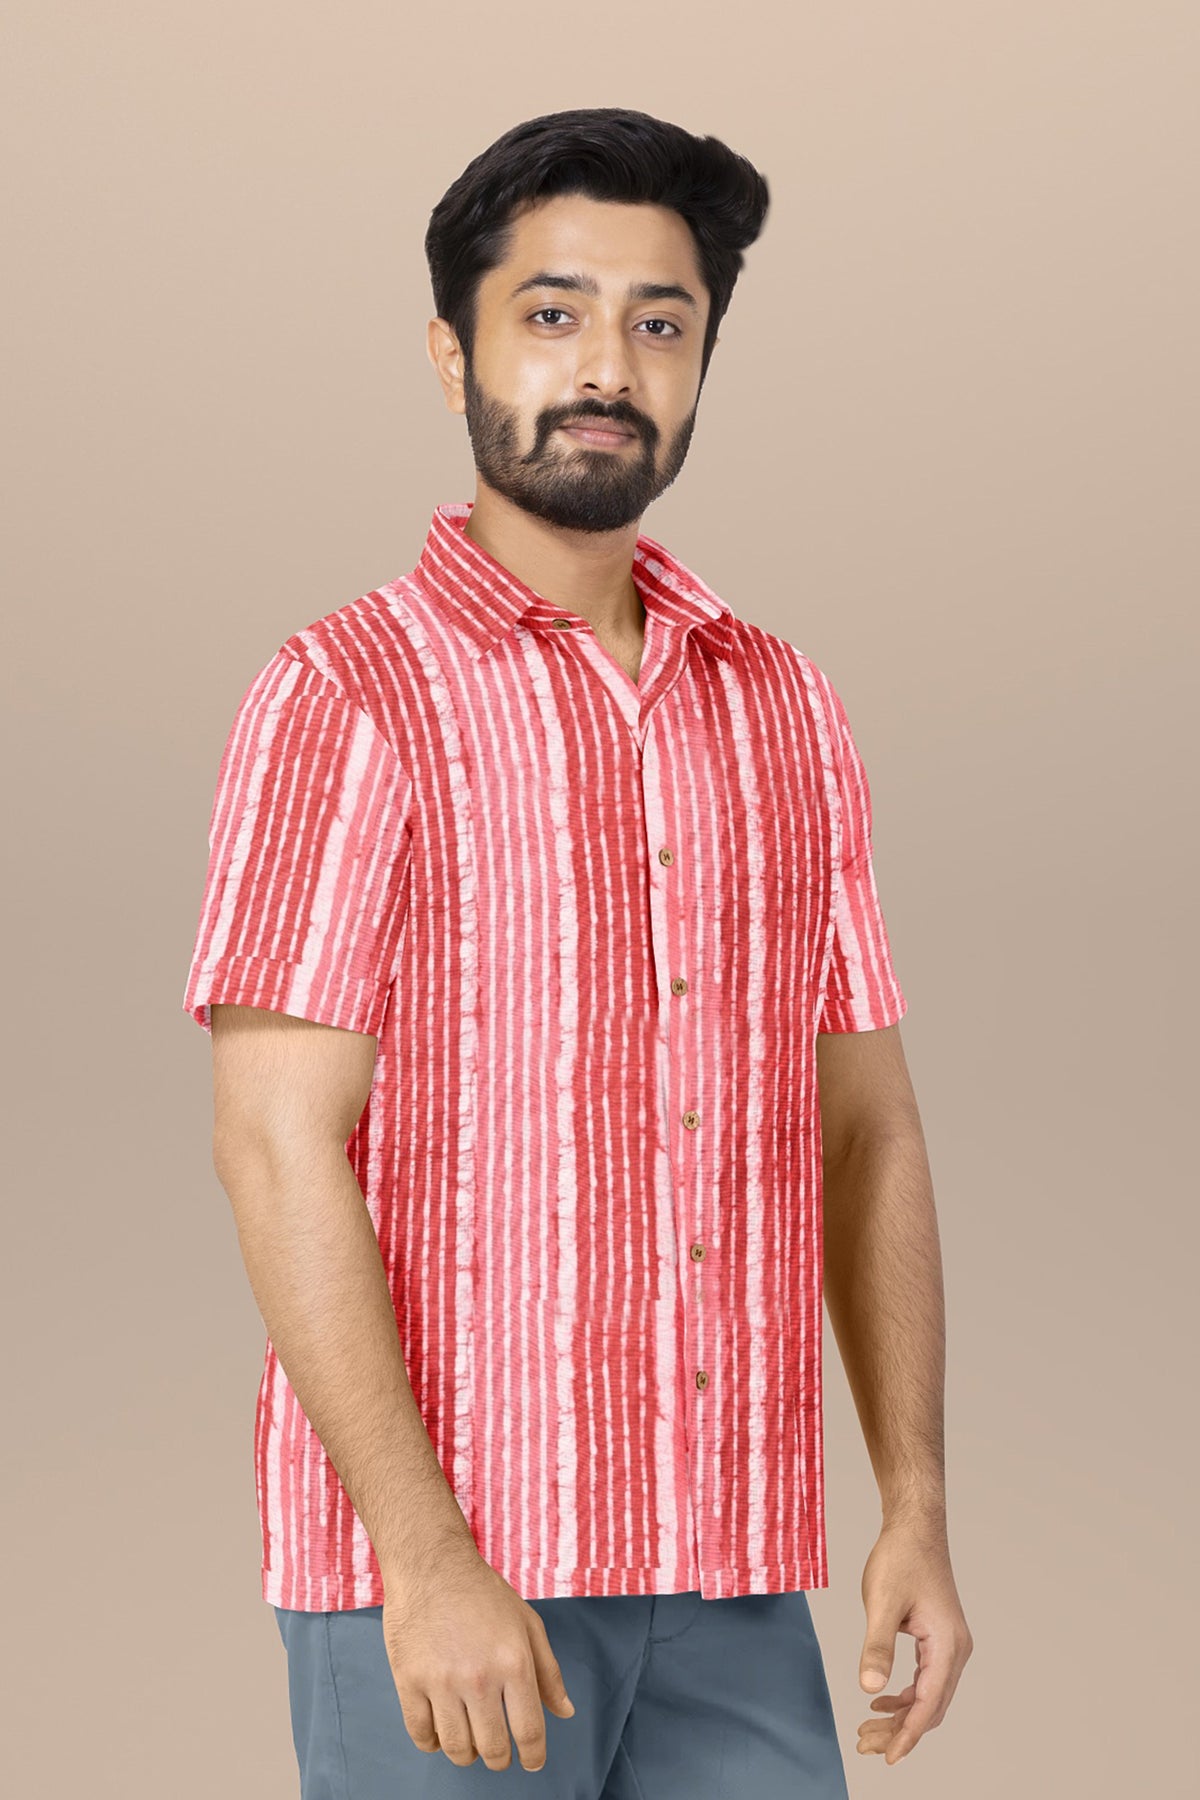 Regular Collar In Stripes Red Cotton Shirt